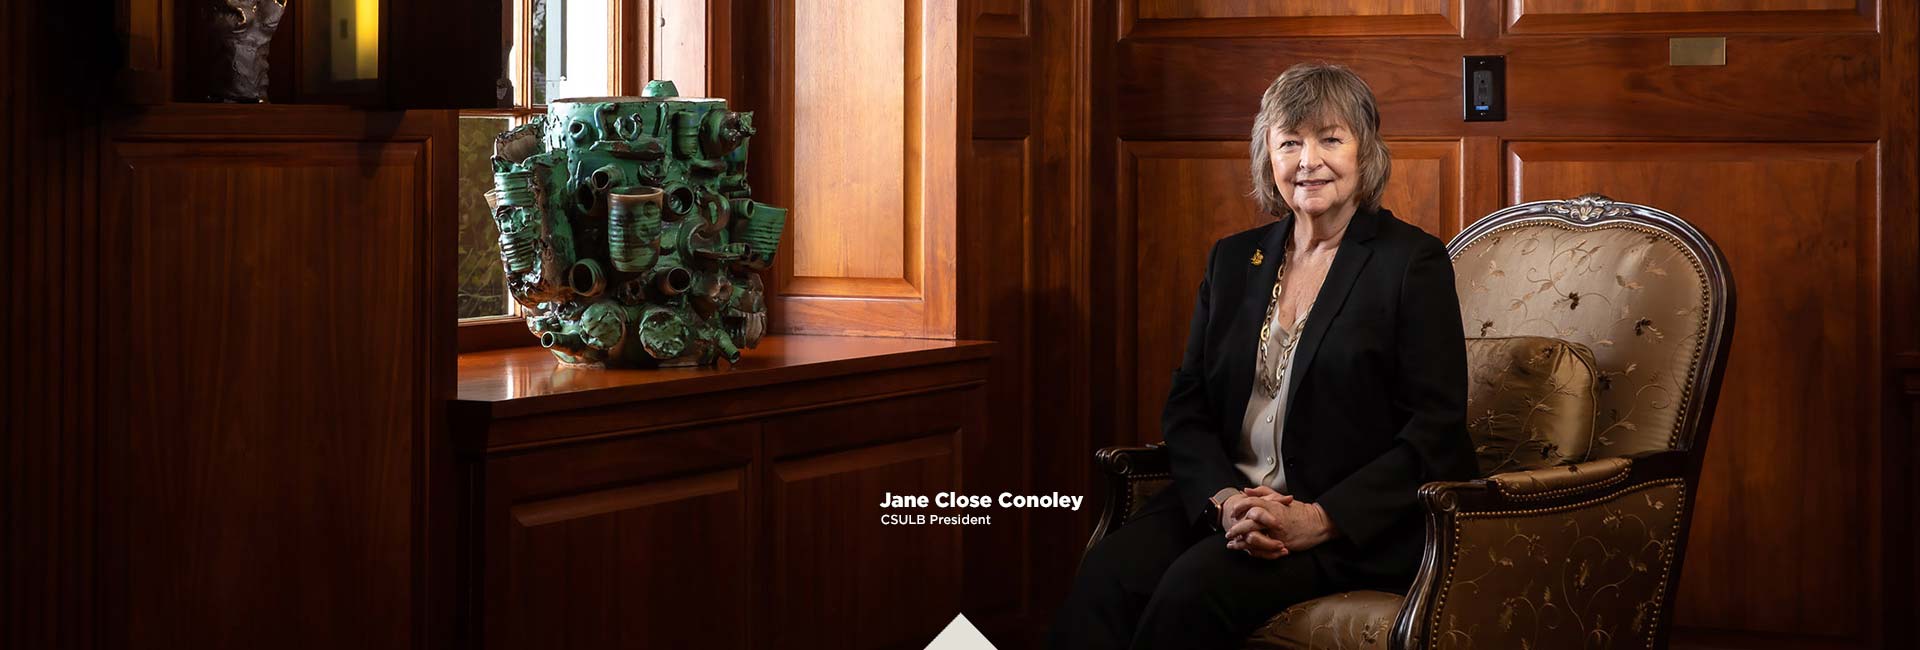 President Jane Close Conoley